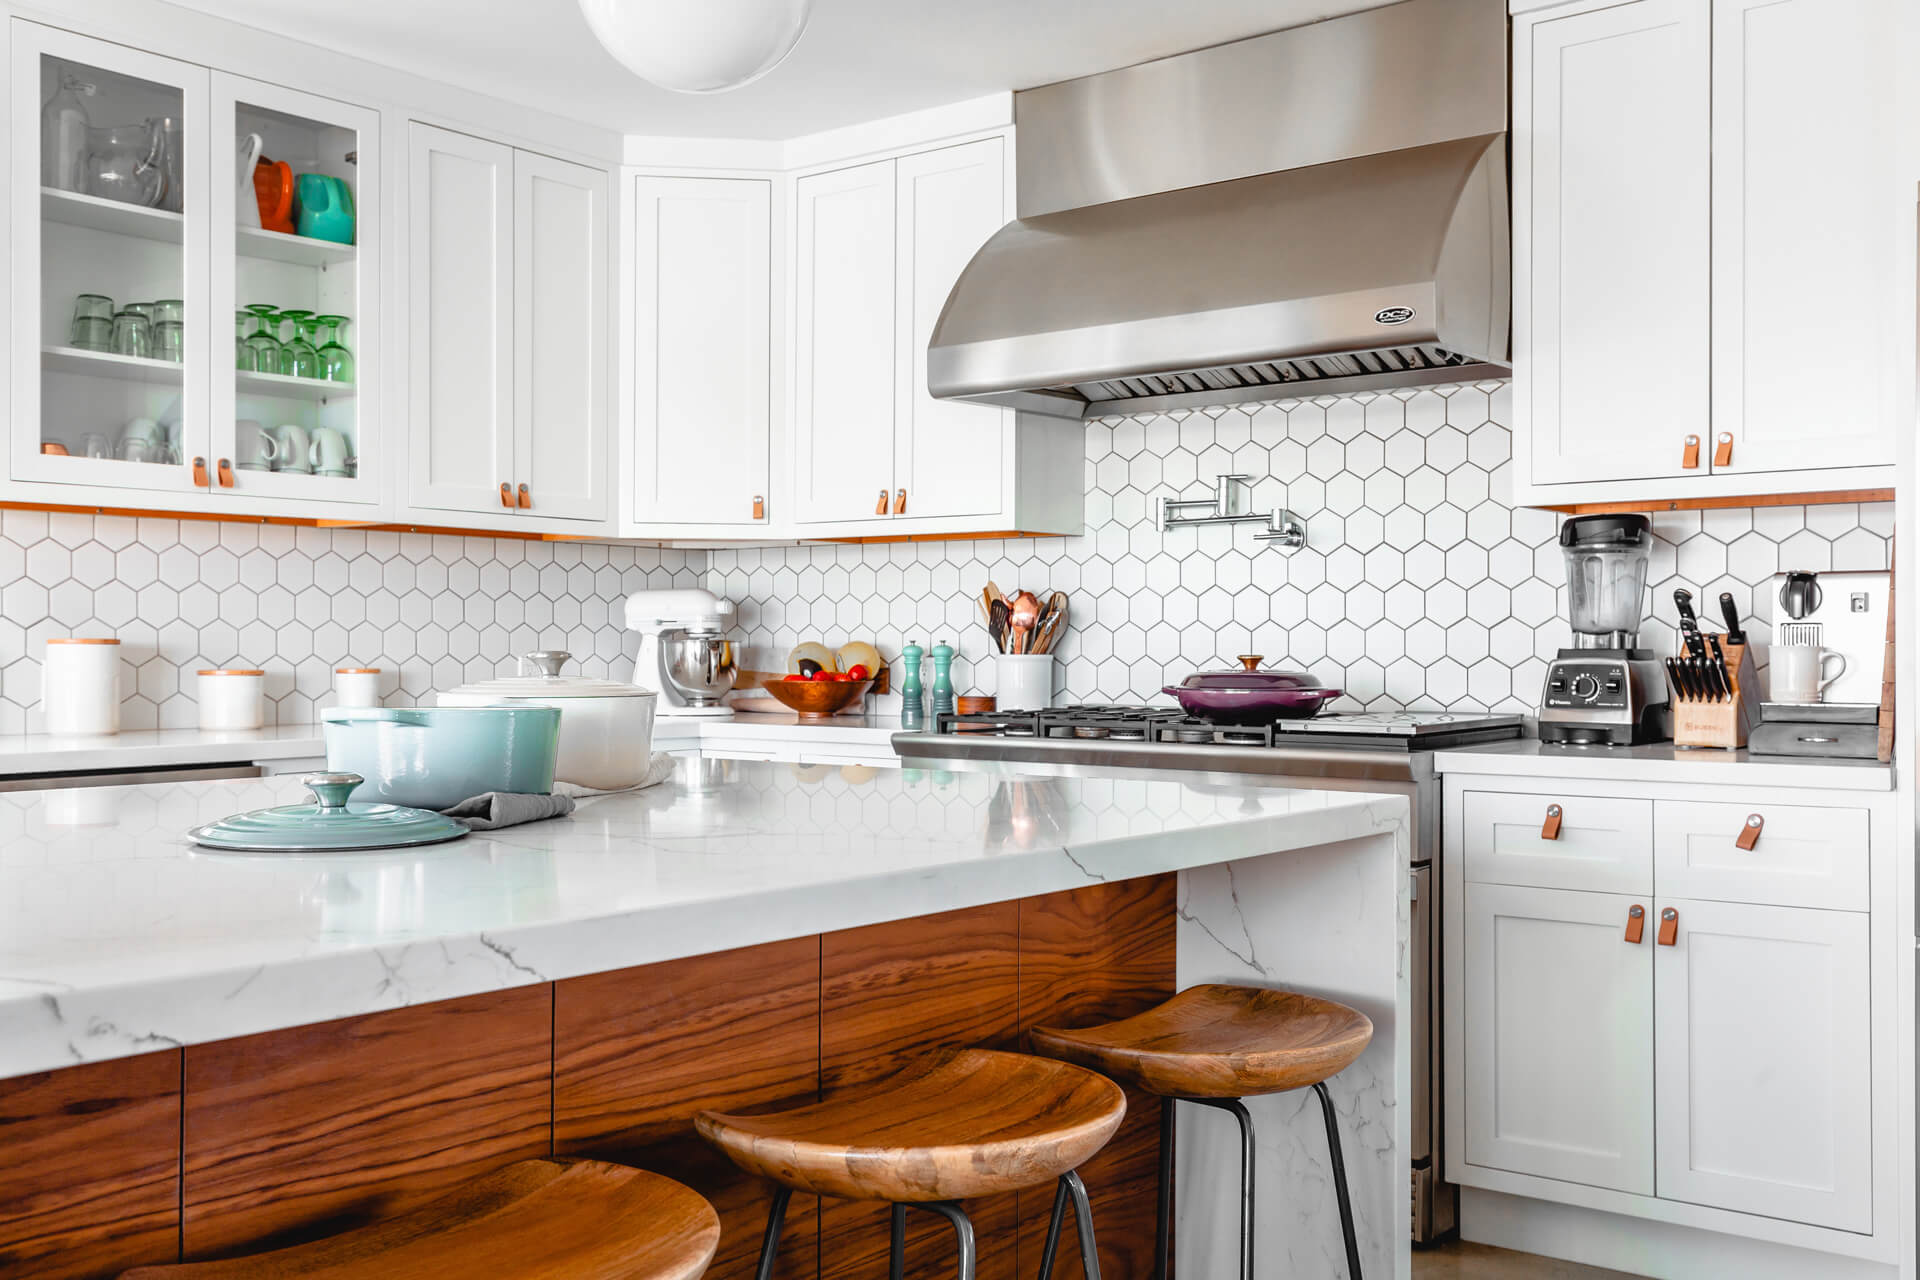 interior bright white kitchen of a duplex home